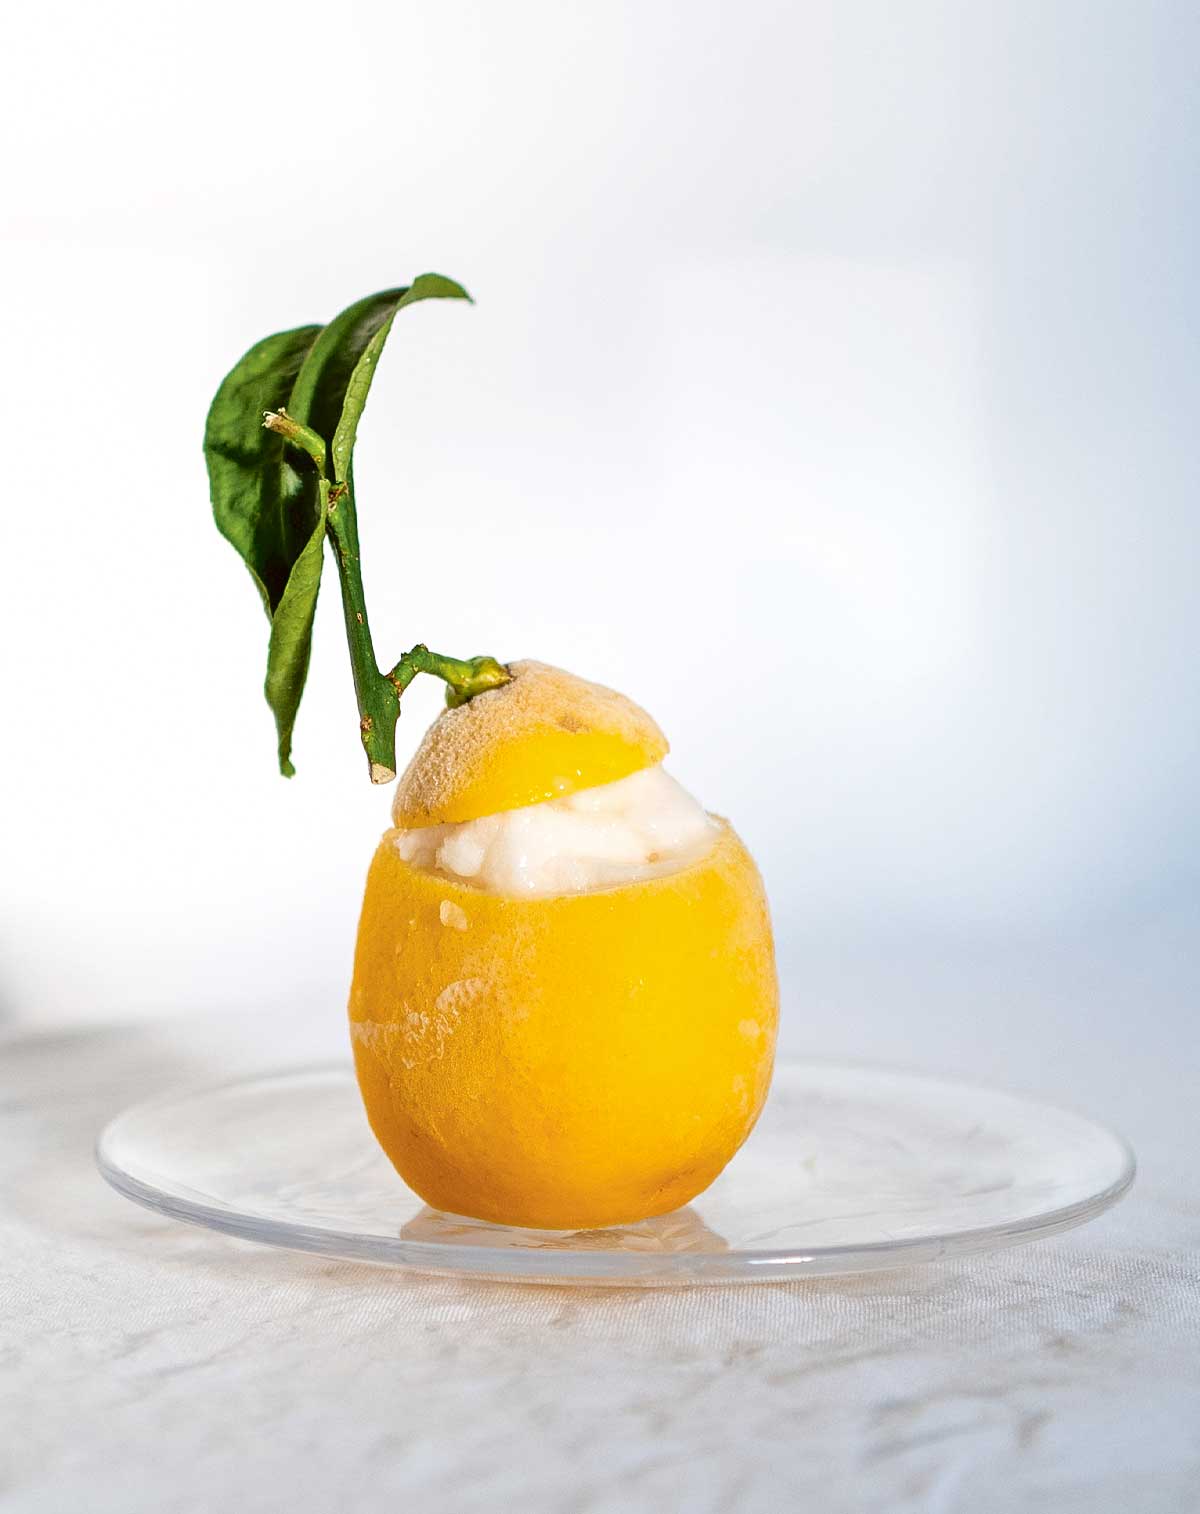 En frostig, ihålig citron med blad, fylld med blek citronsorbet på en glasskiva.